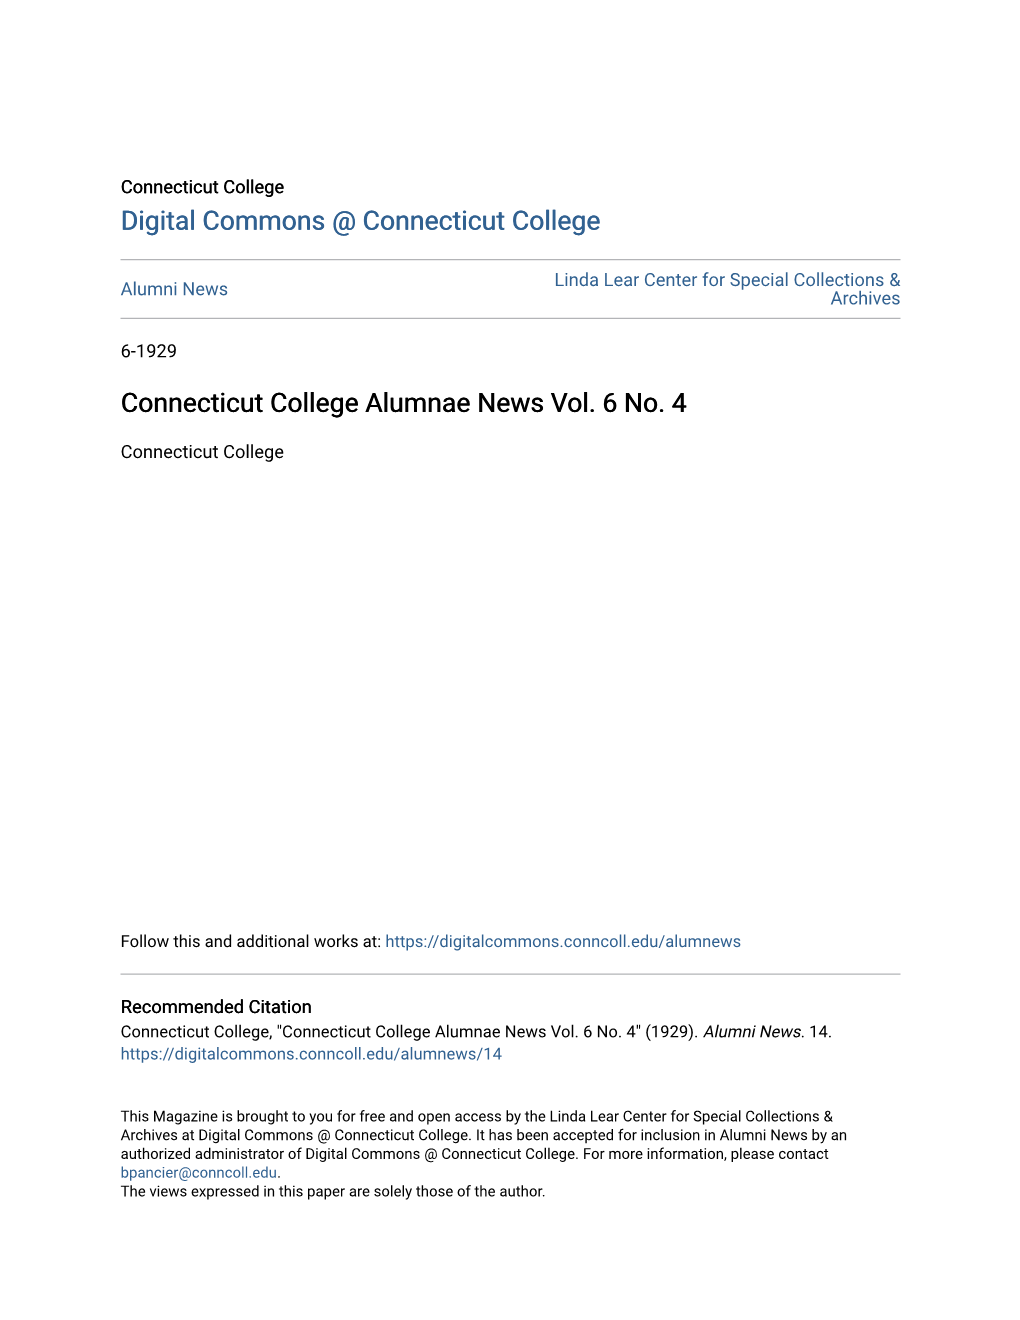 Connecticut College Alumnae News Vol. 6 No. 4